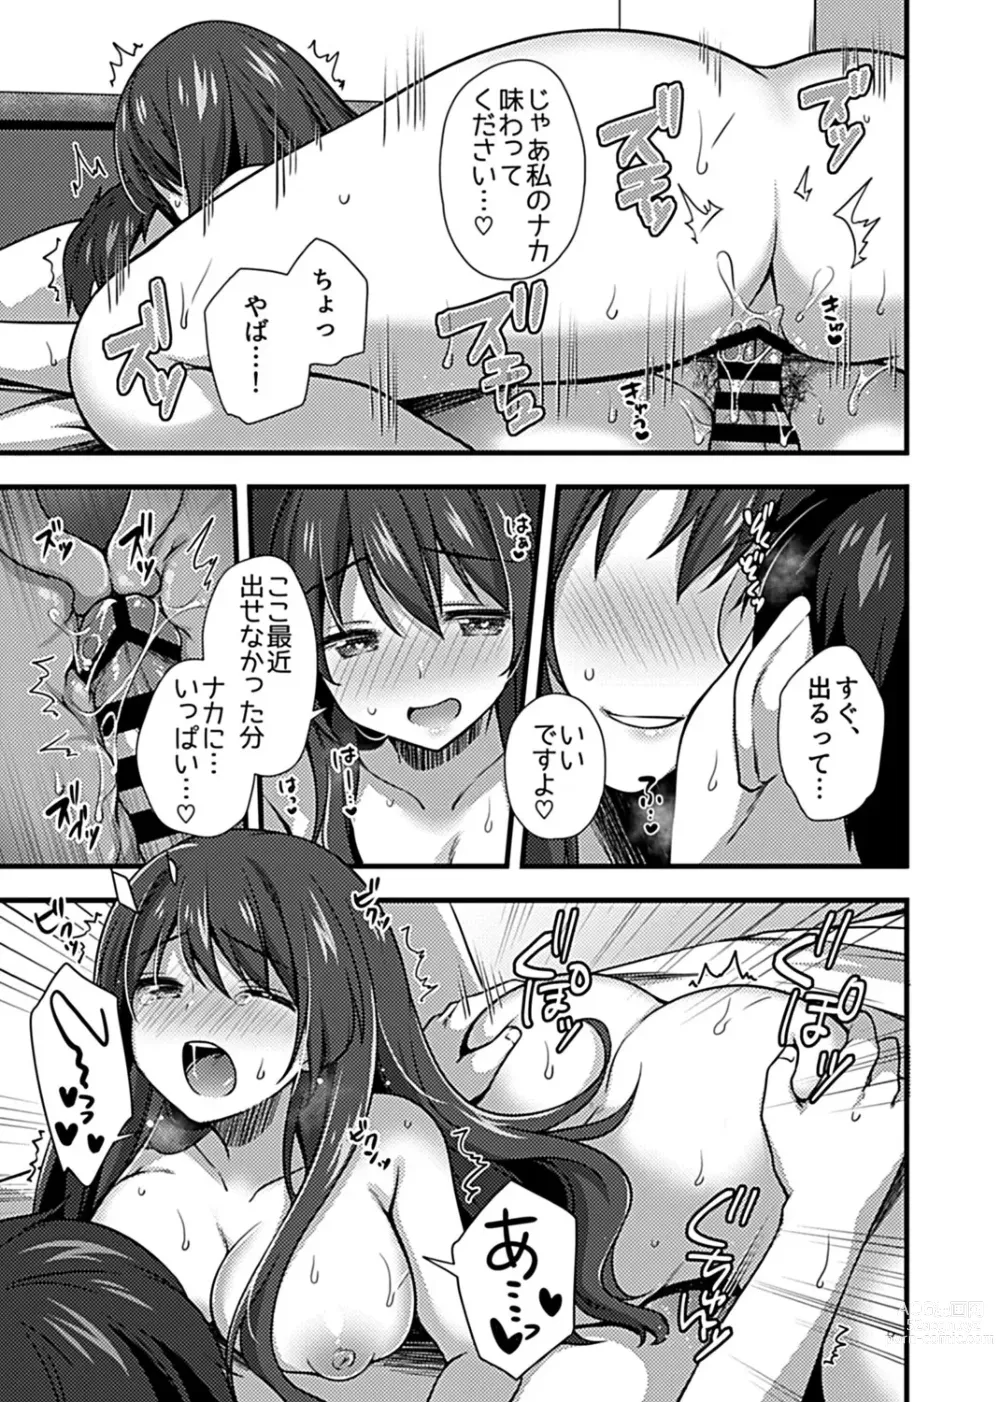 Page 161 of manga COMIC GEE Vol. 17